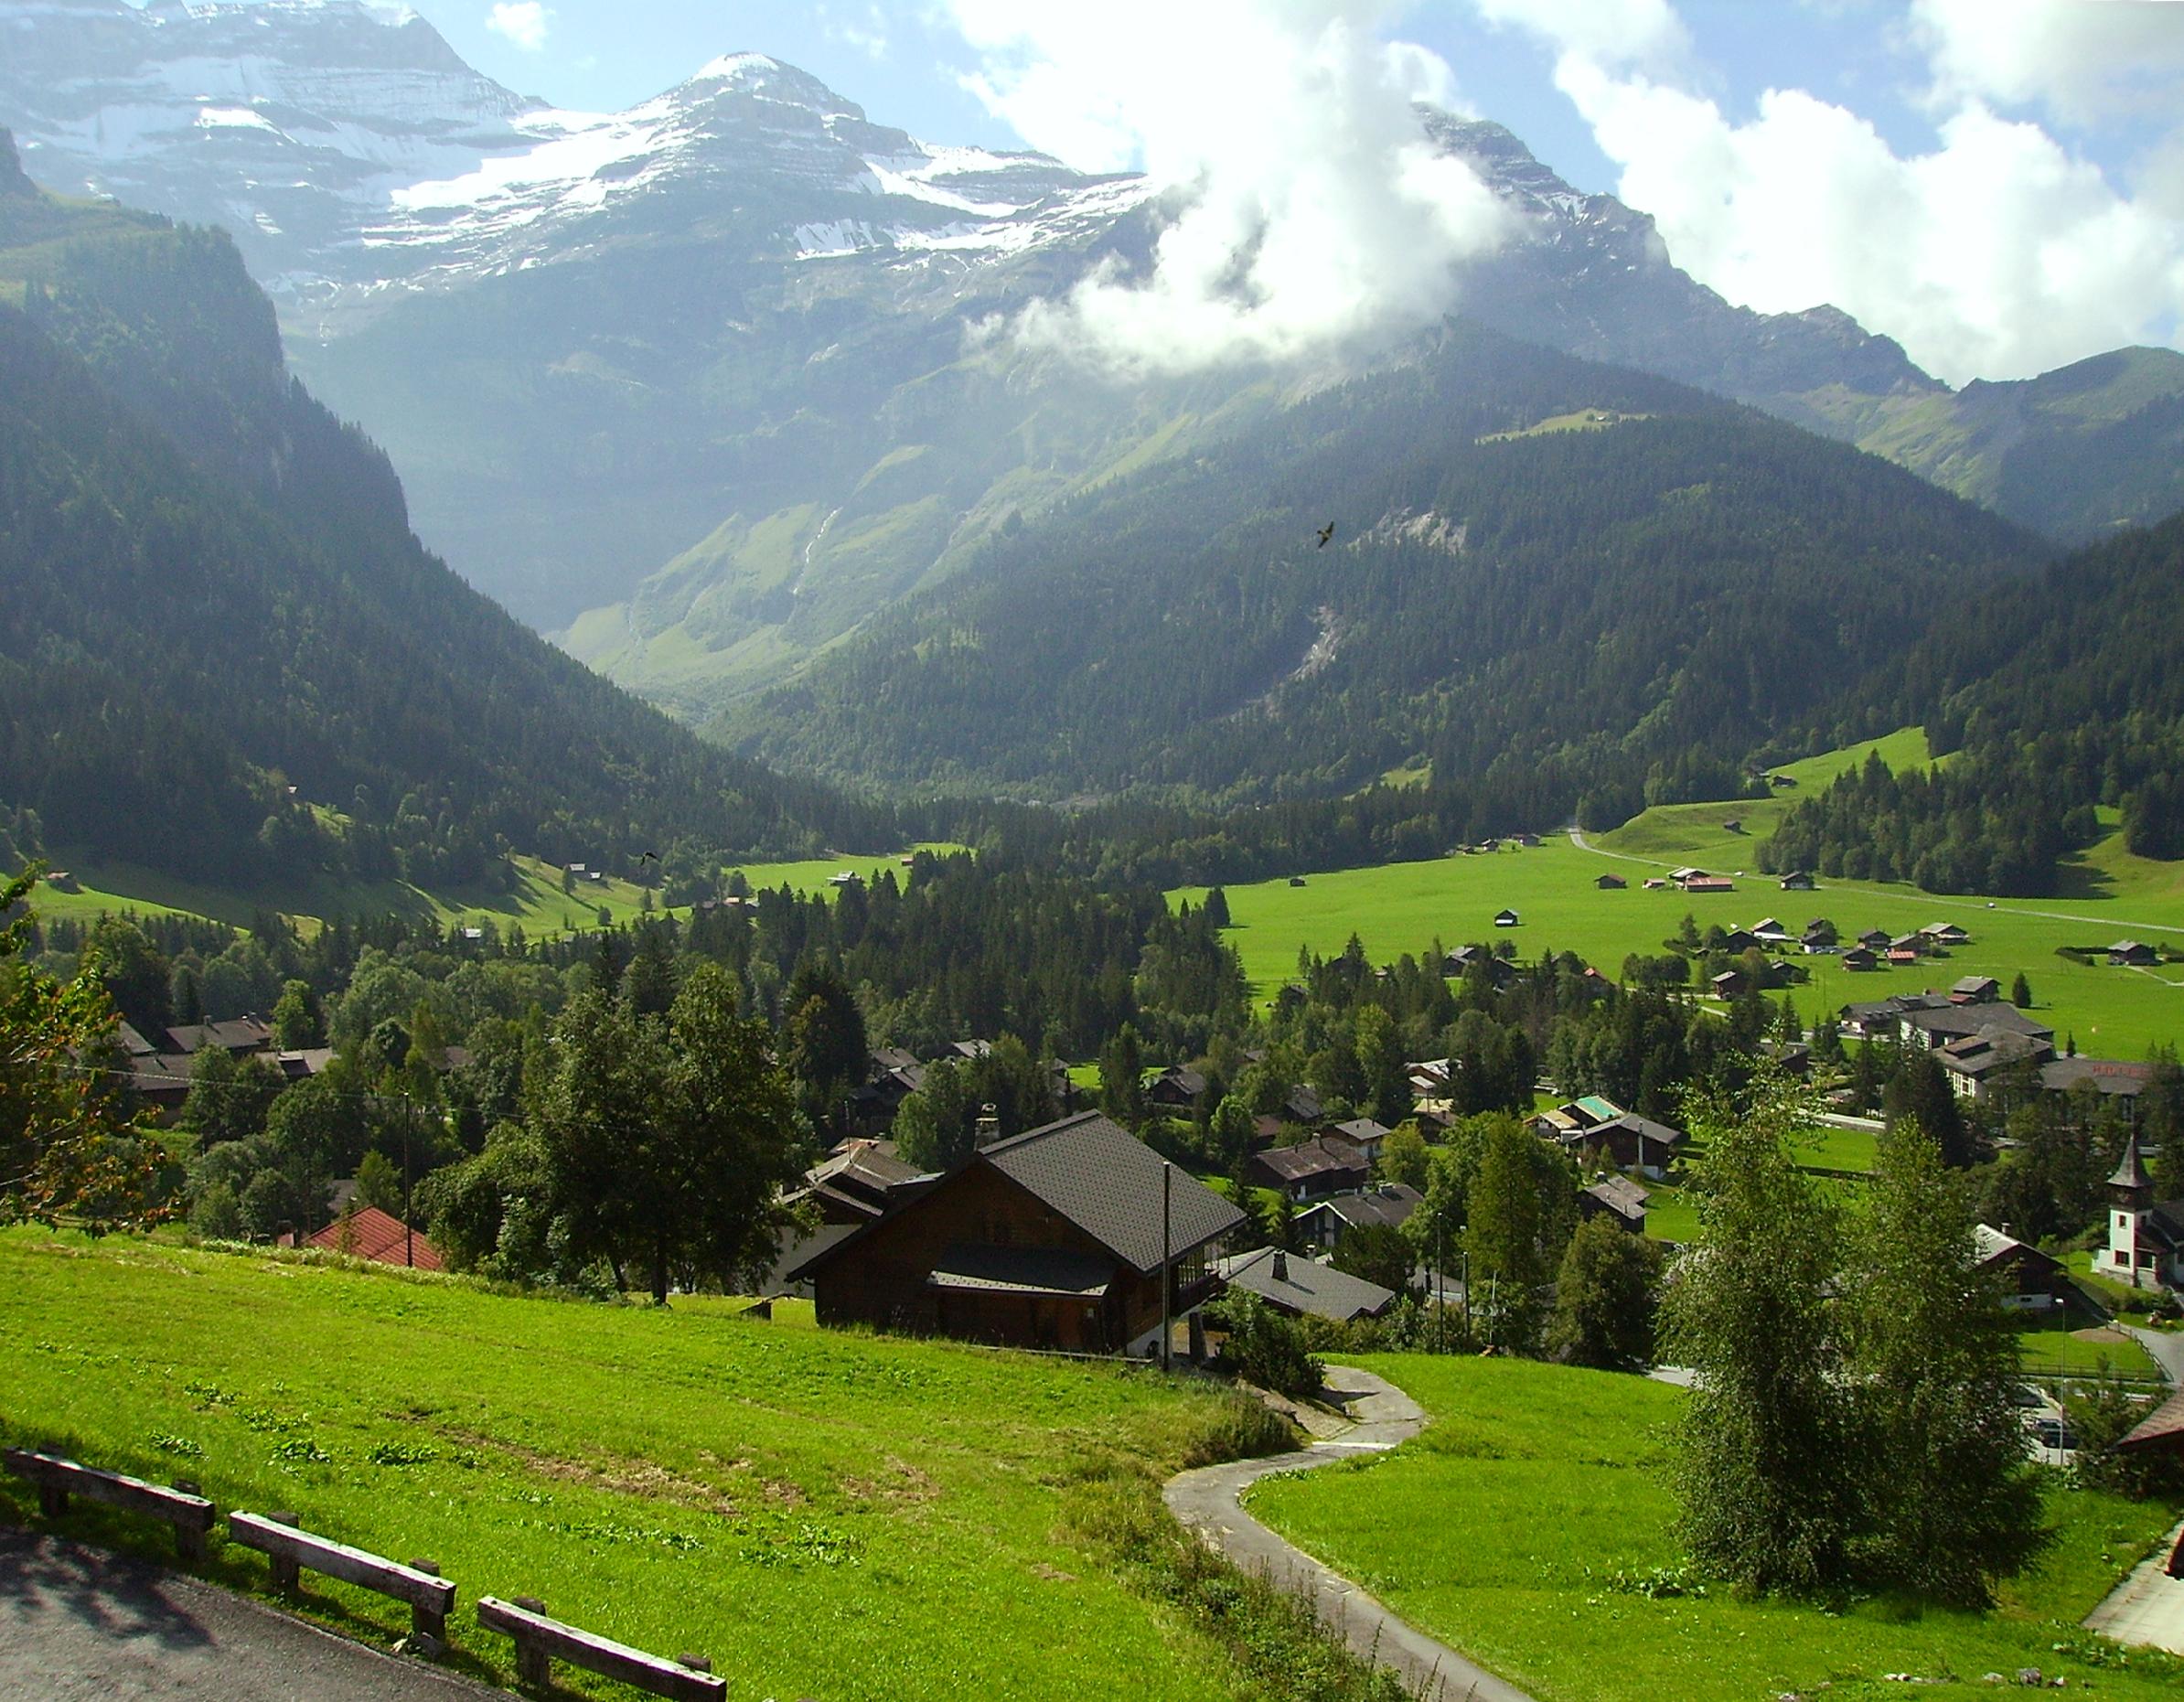 Les. Les Diablerets Швейцария. Деревушка в горах Швейцарии. Горные деревни Швейцарии. Швейцария деревня в горах.